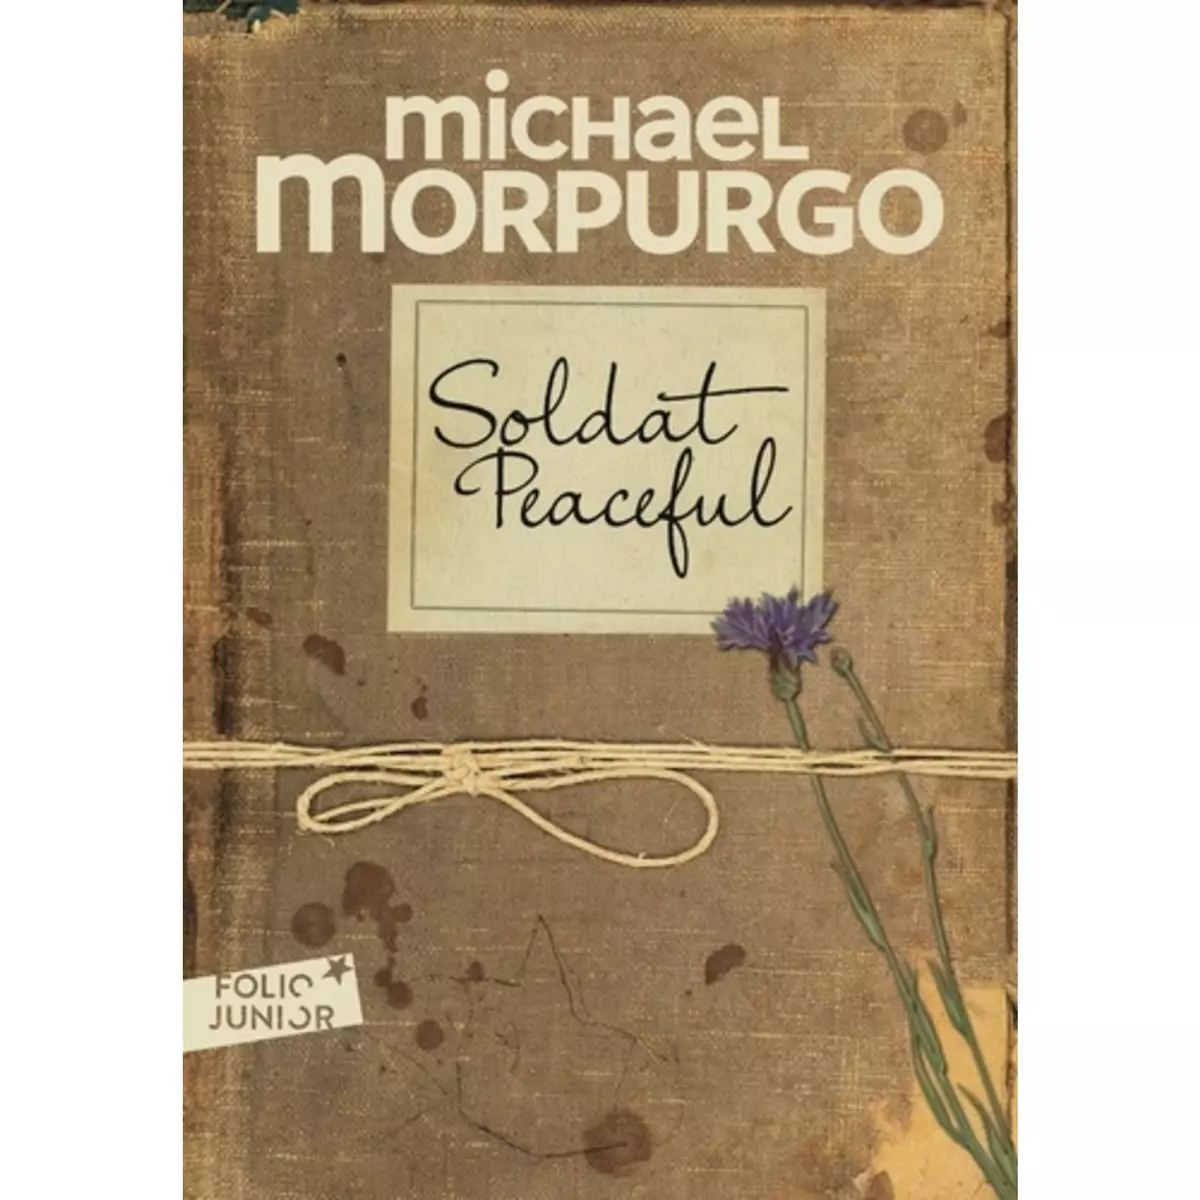  SOLDAT PEACEFUL, Morpurgo Michael